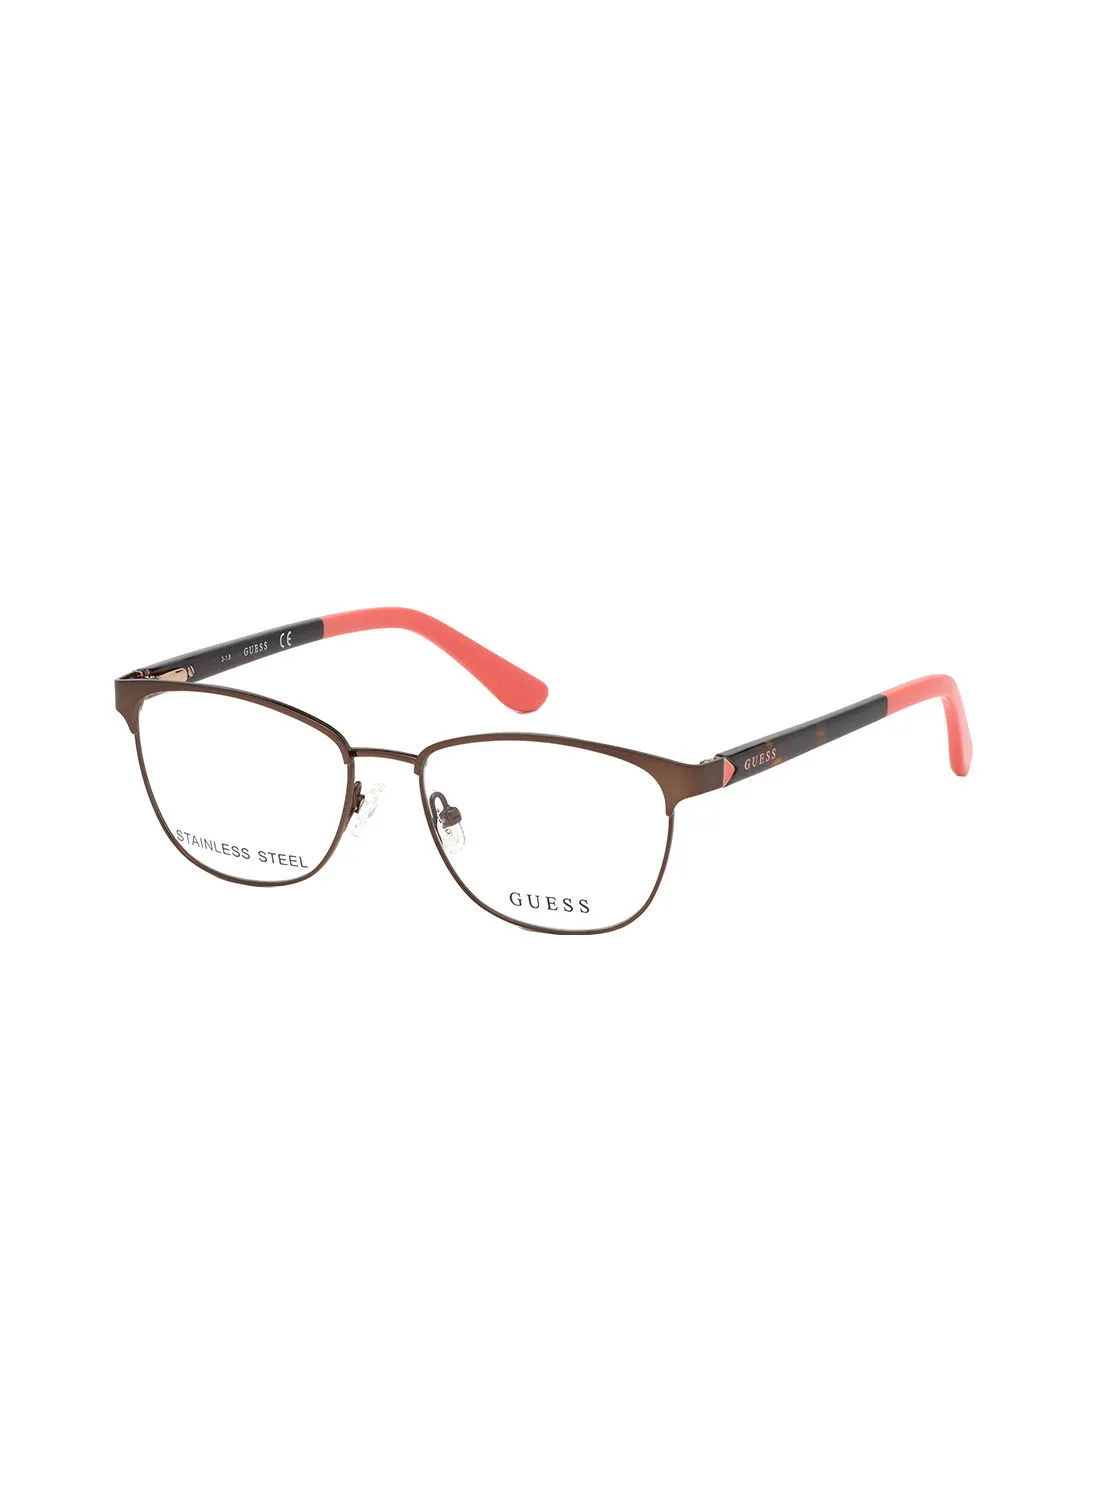 GUESS Hexagon Eyewear Optical Frame GU269904950